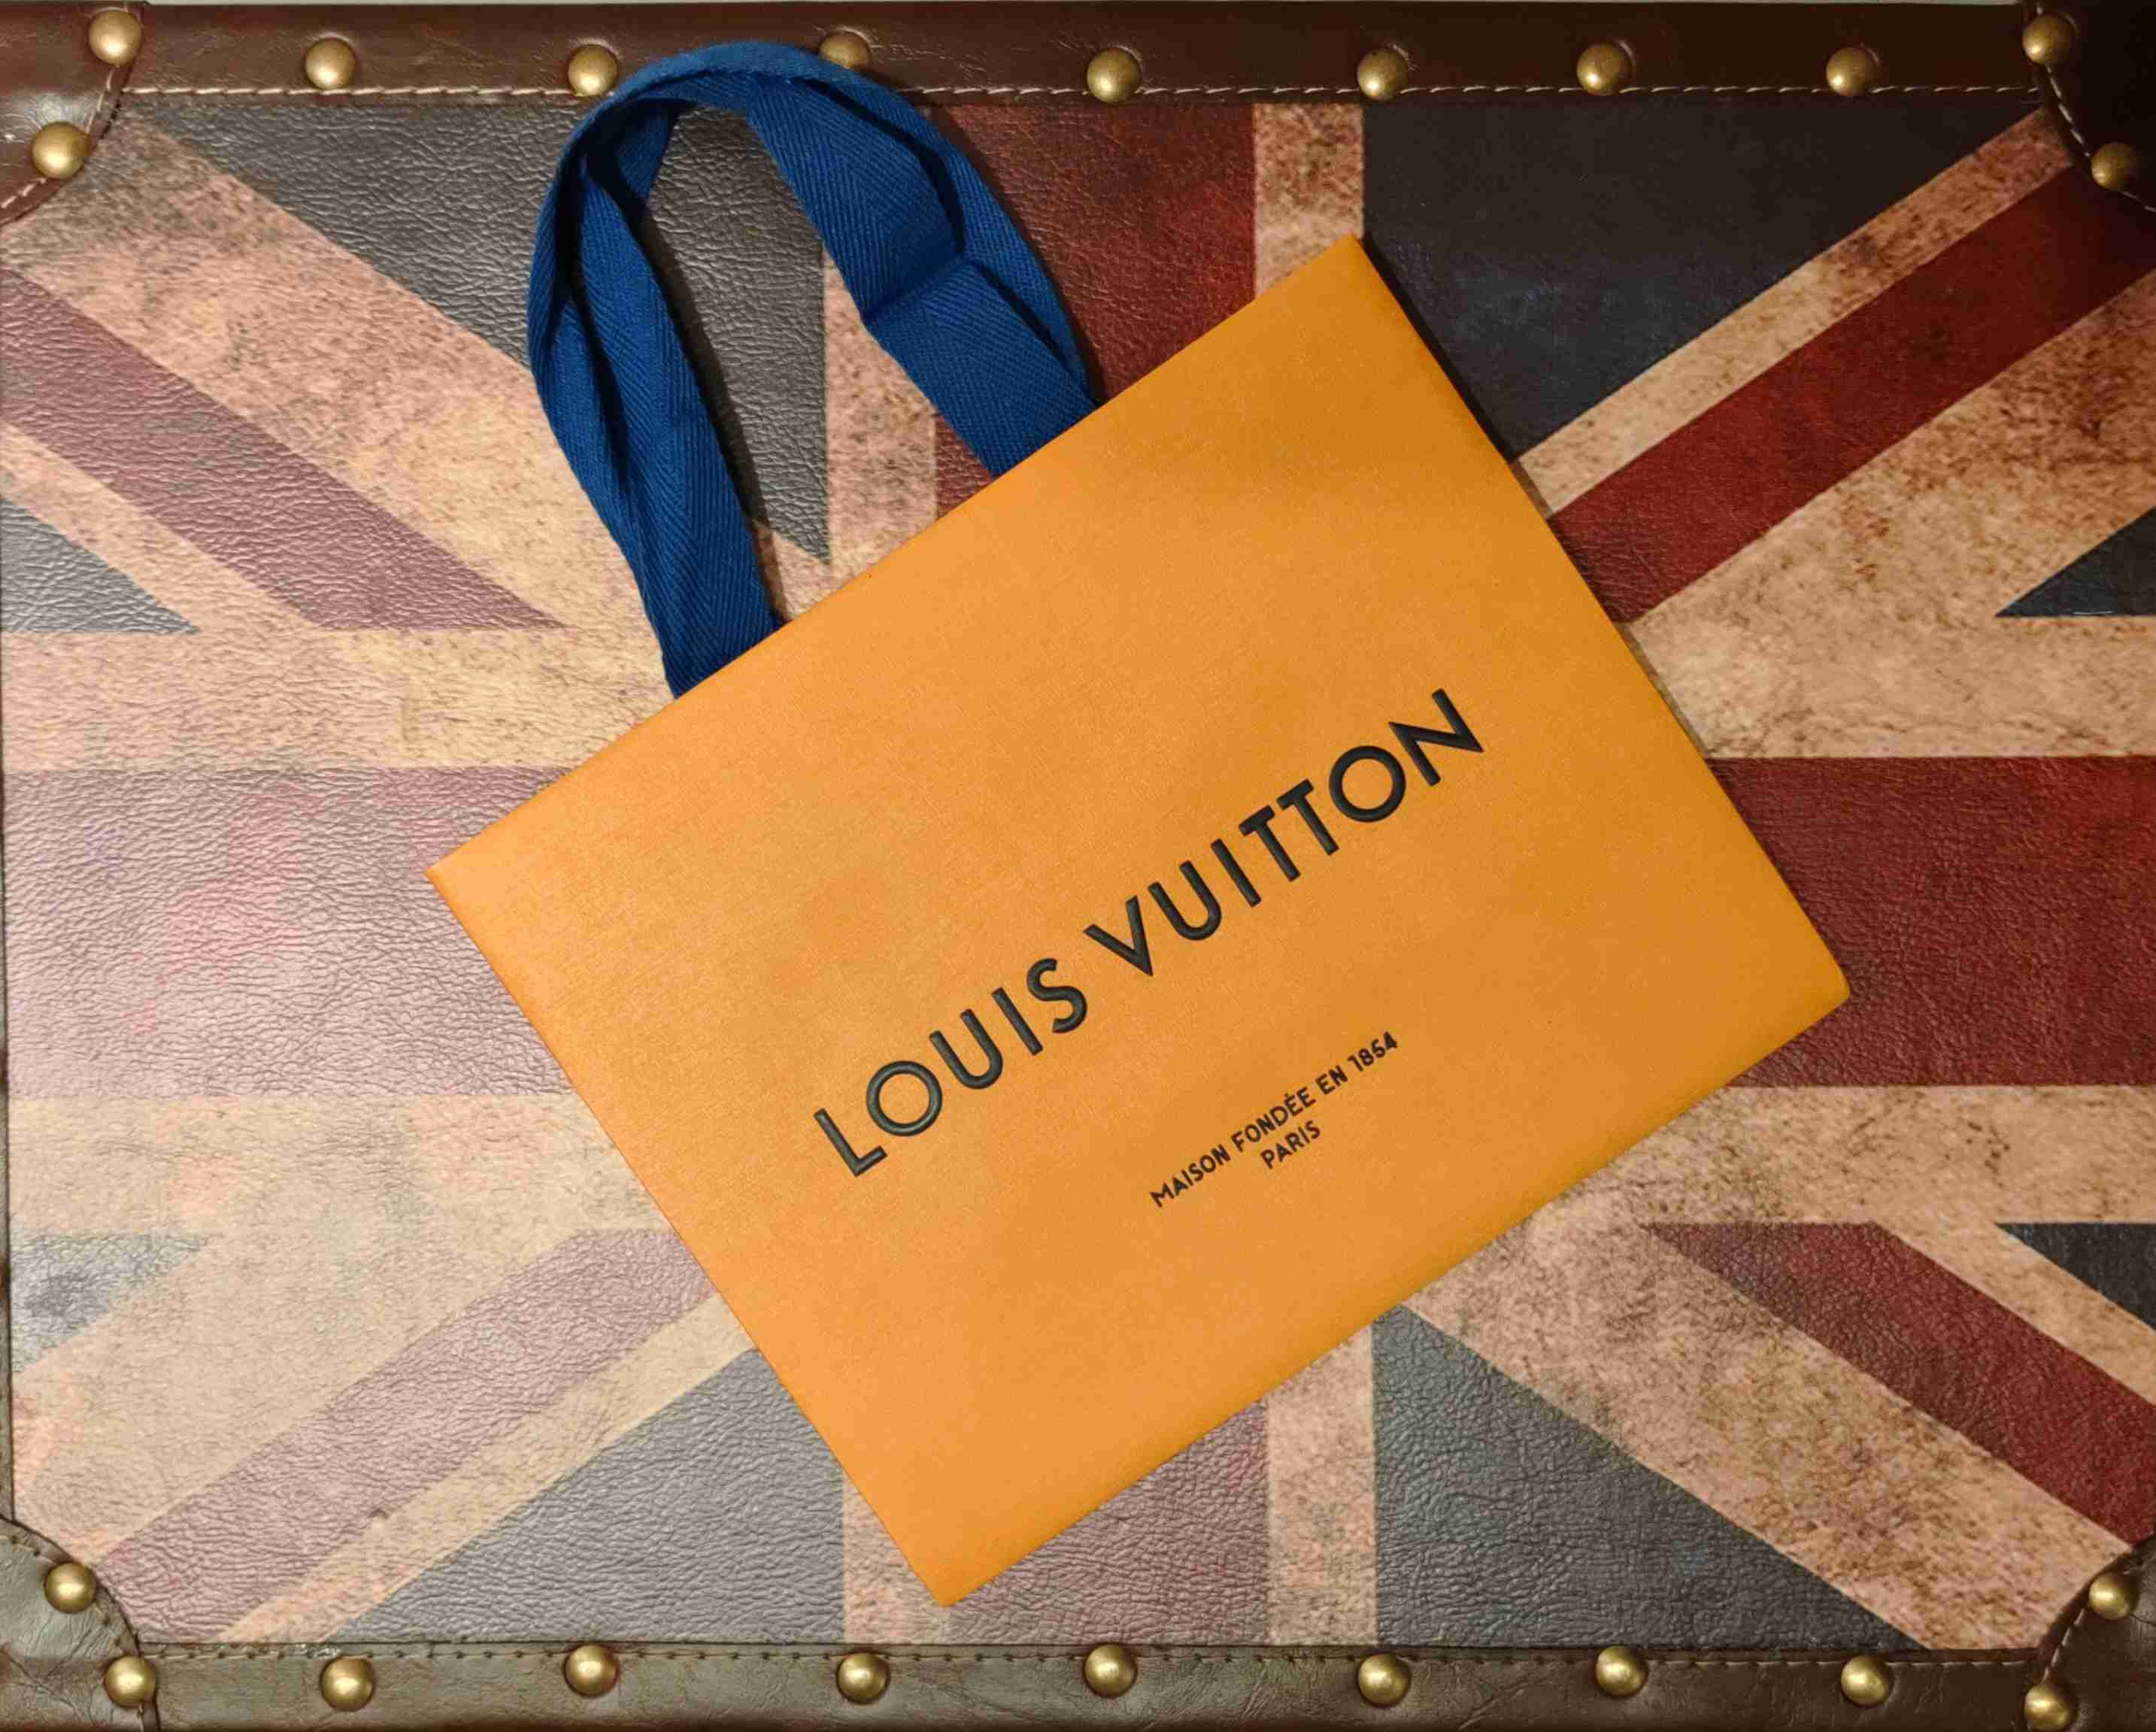 Louis Vuitton 藍色握把紙袋(限雙北市捷運站面交） - 好物販售-線上